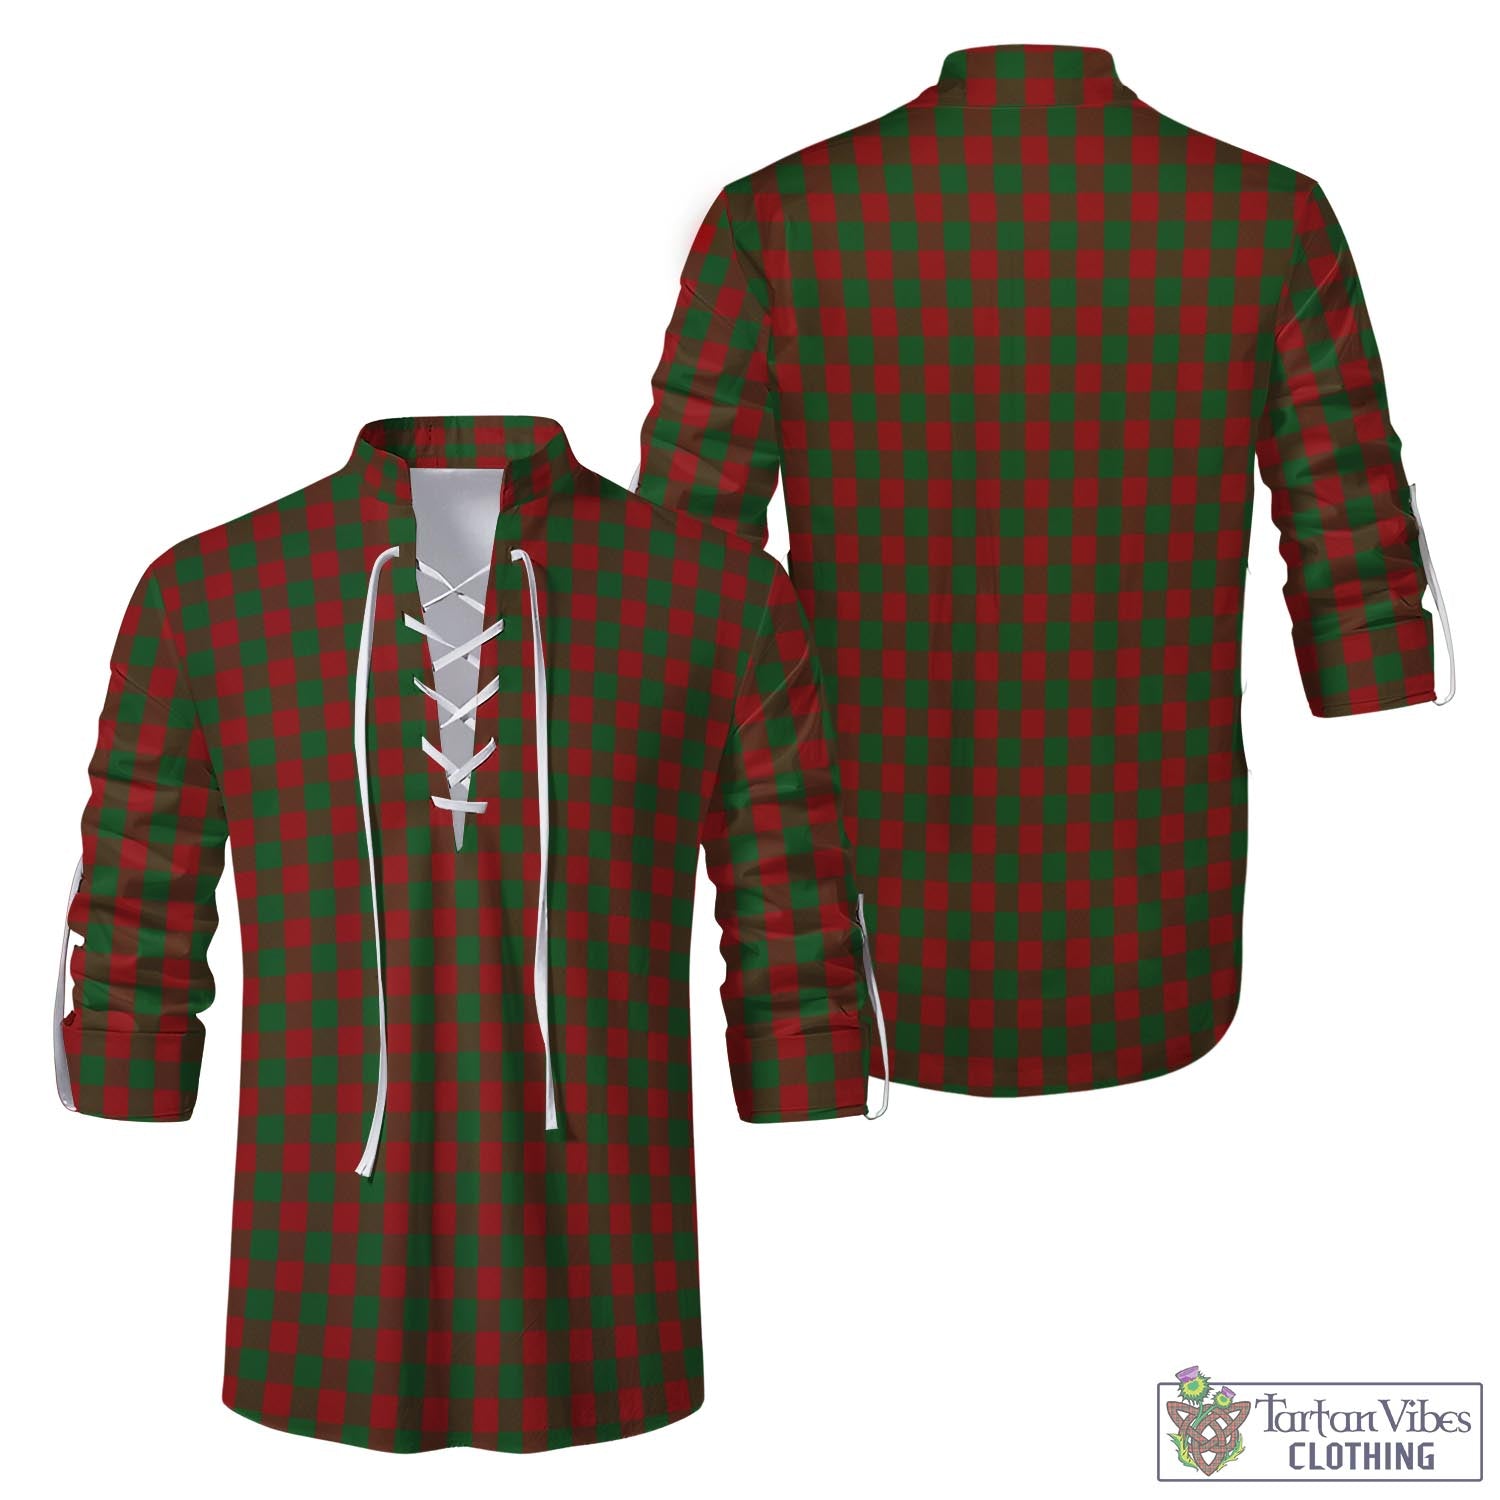 Tartan Vibes Clothing Moncrieff Tartan Men's Scottish Traditional Jacobite Ghillie Kilt Shirt